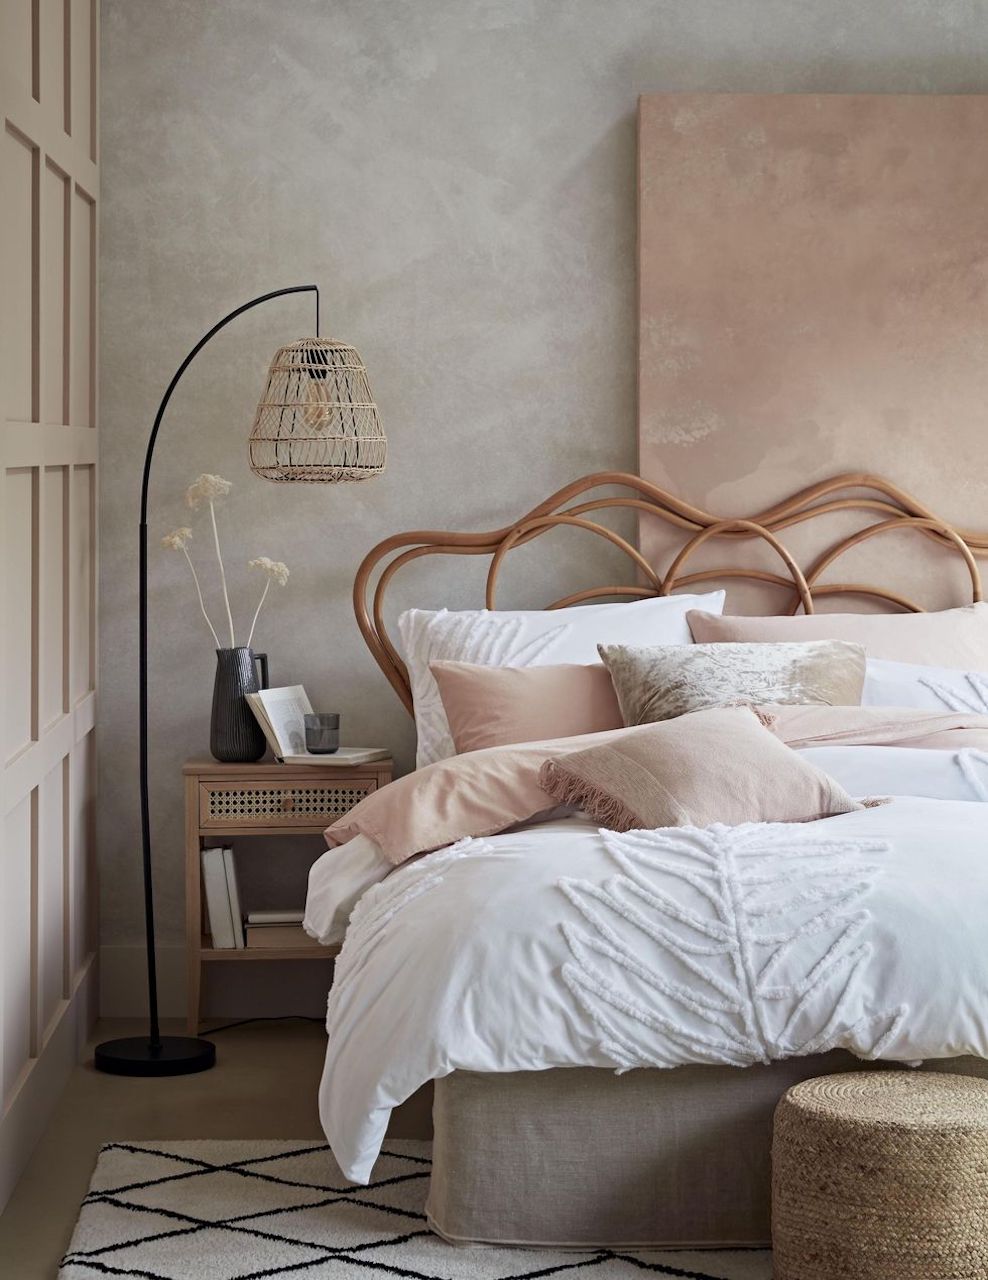 japandi design style bedroom bed lamp